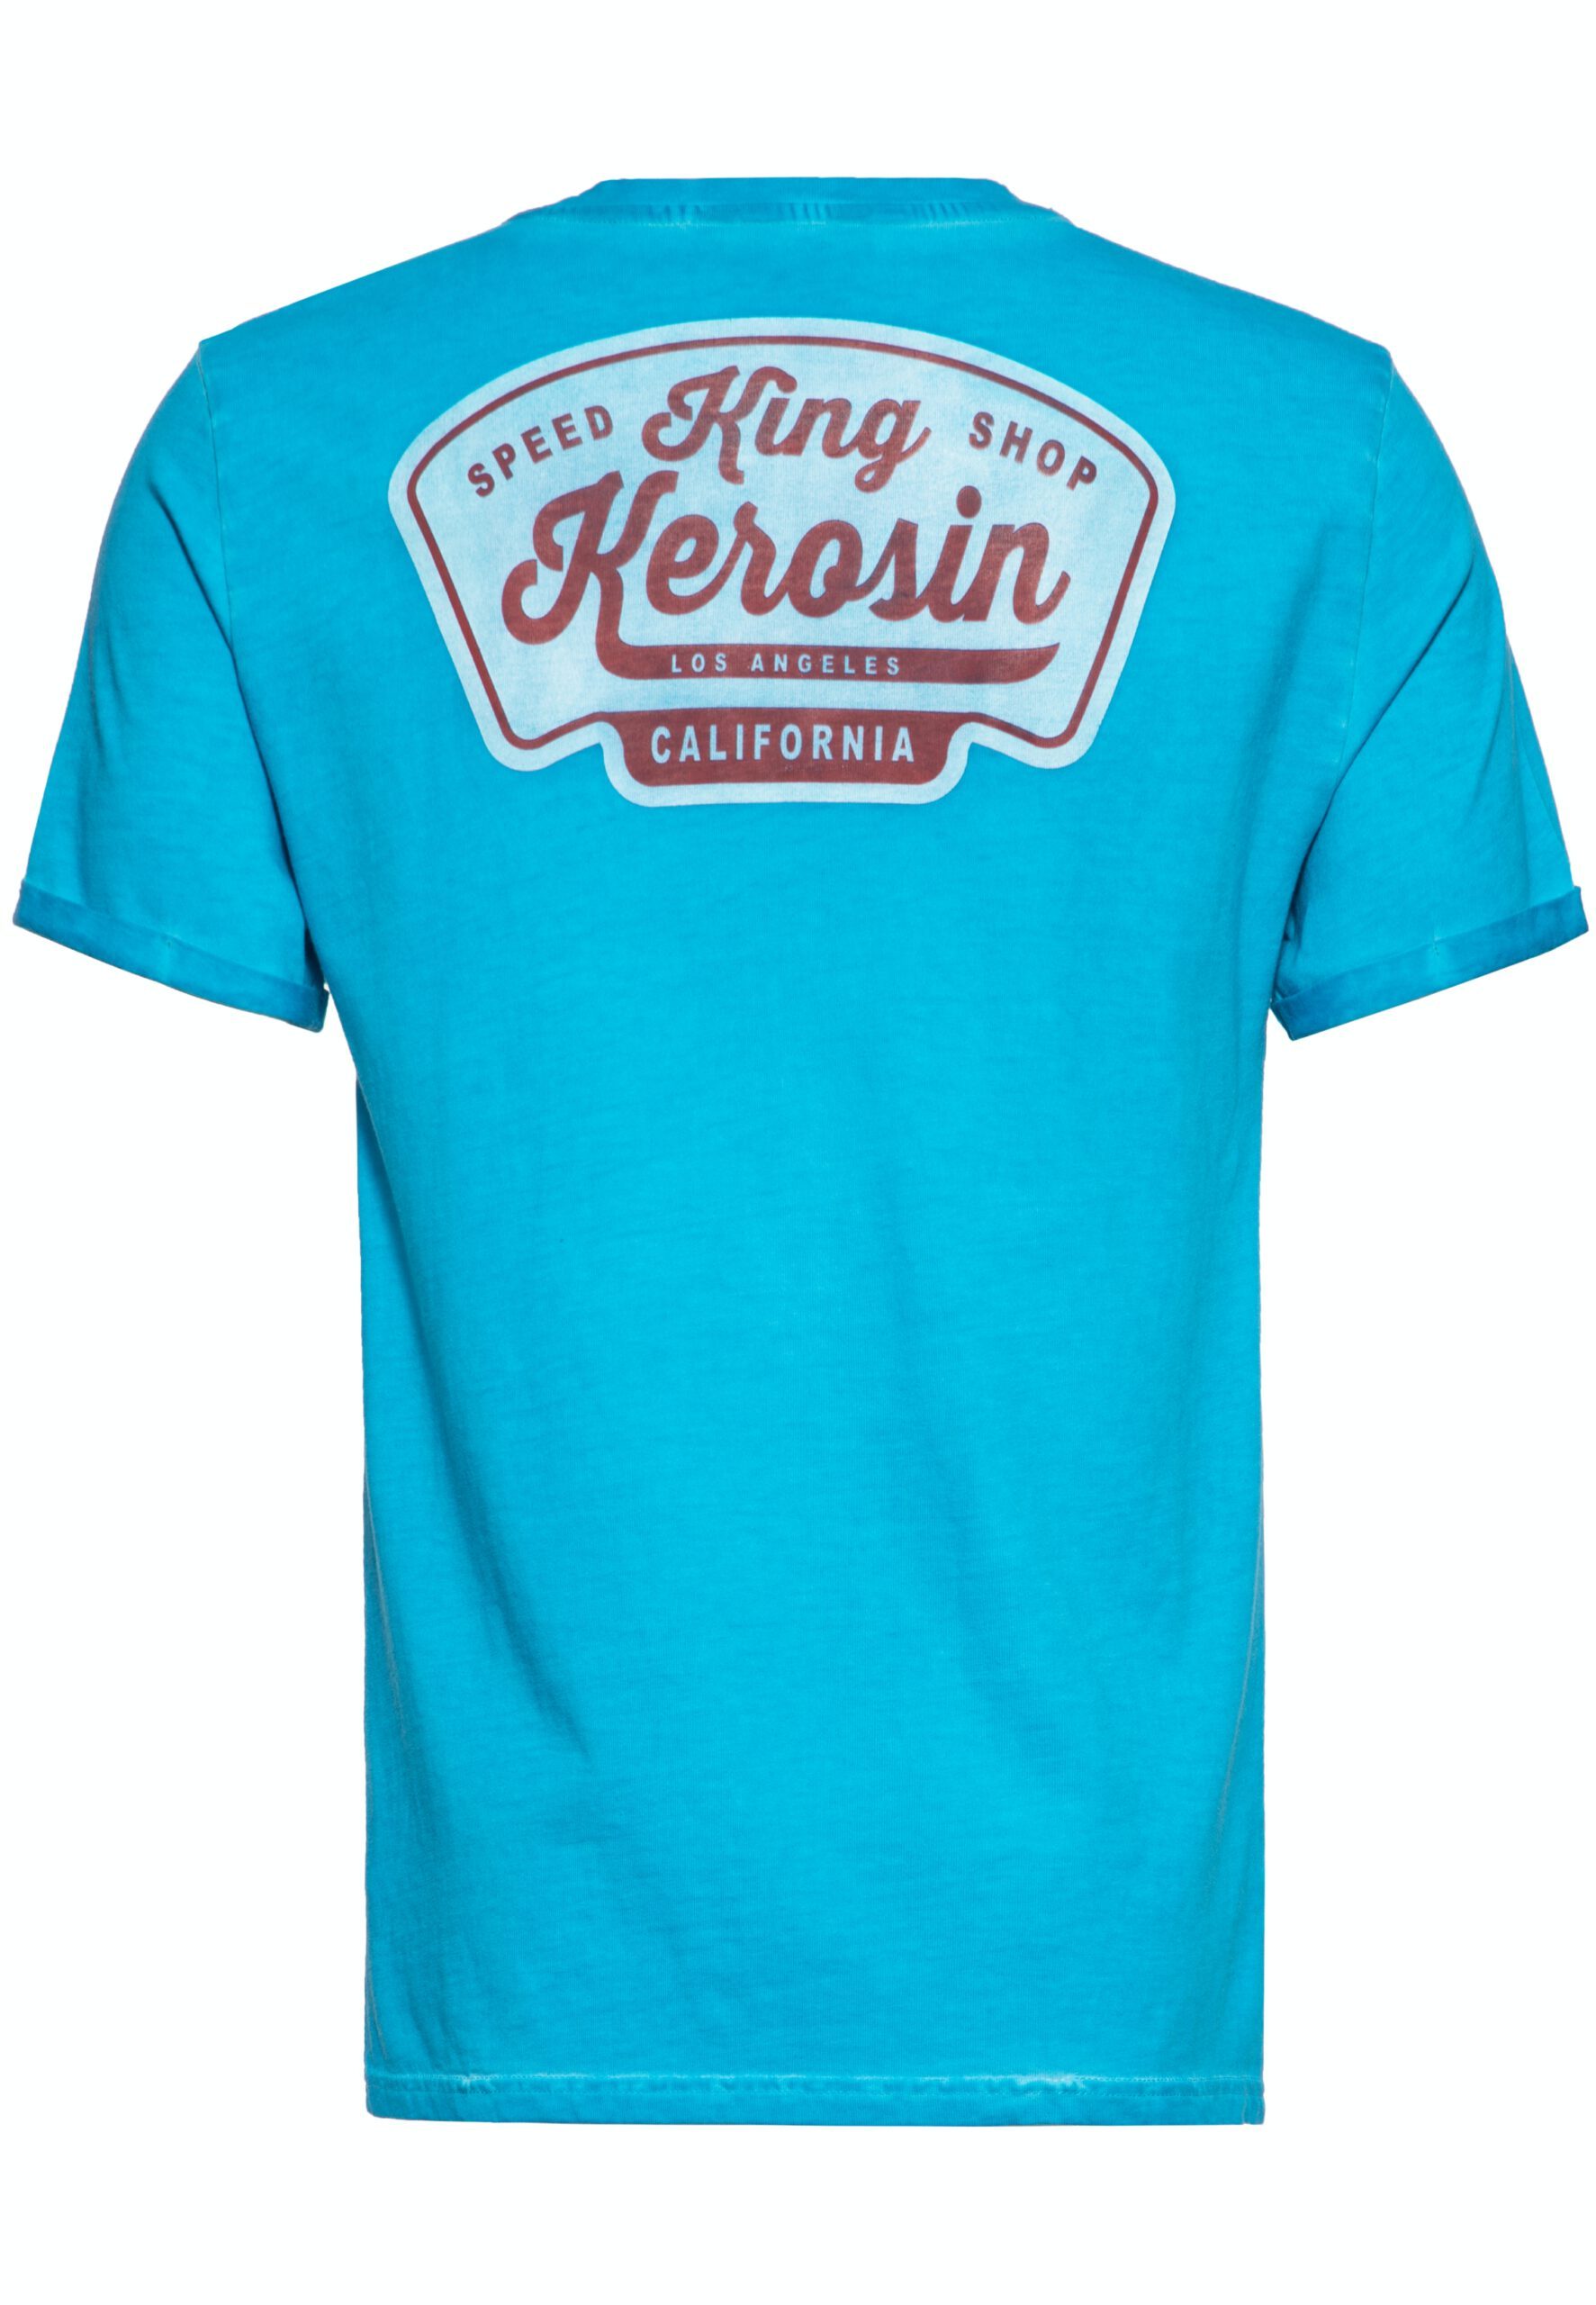 MoFa King – Lounge Kerosin Oil King T-Shirt Kerosin« »Speedshop Washed